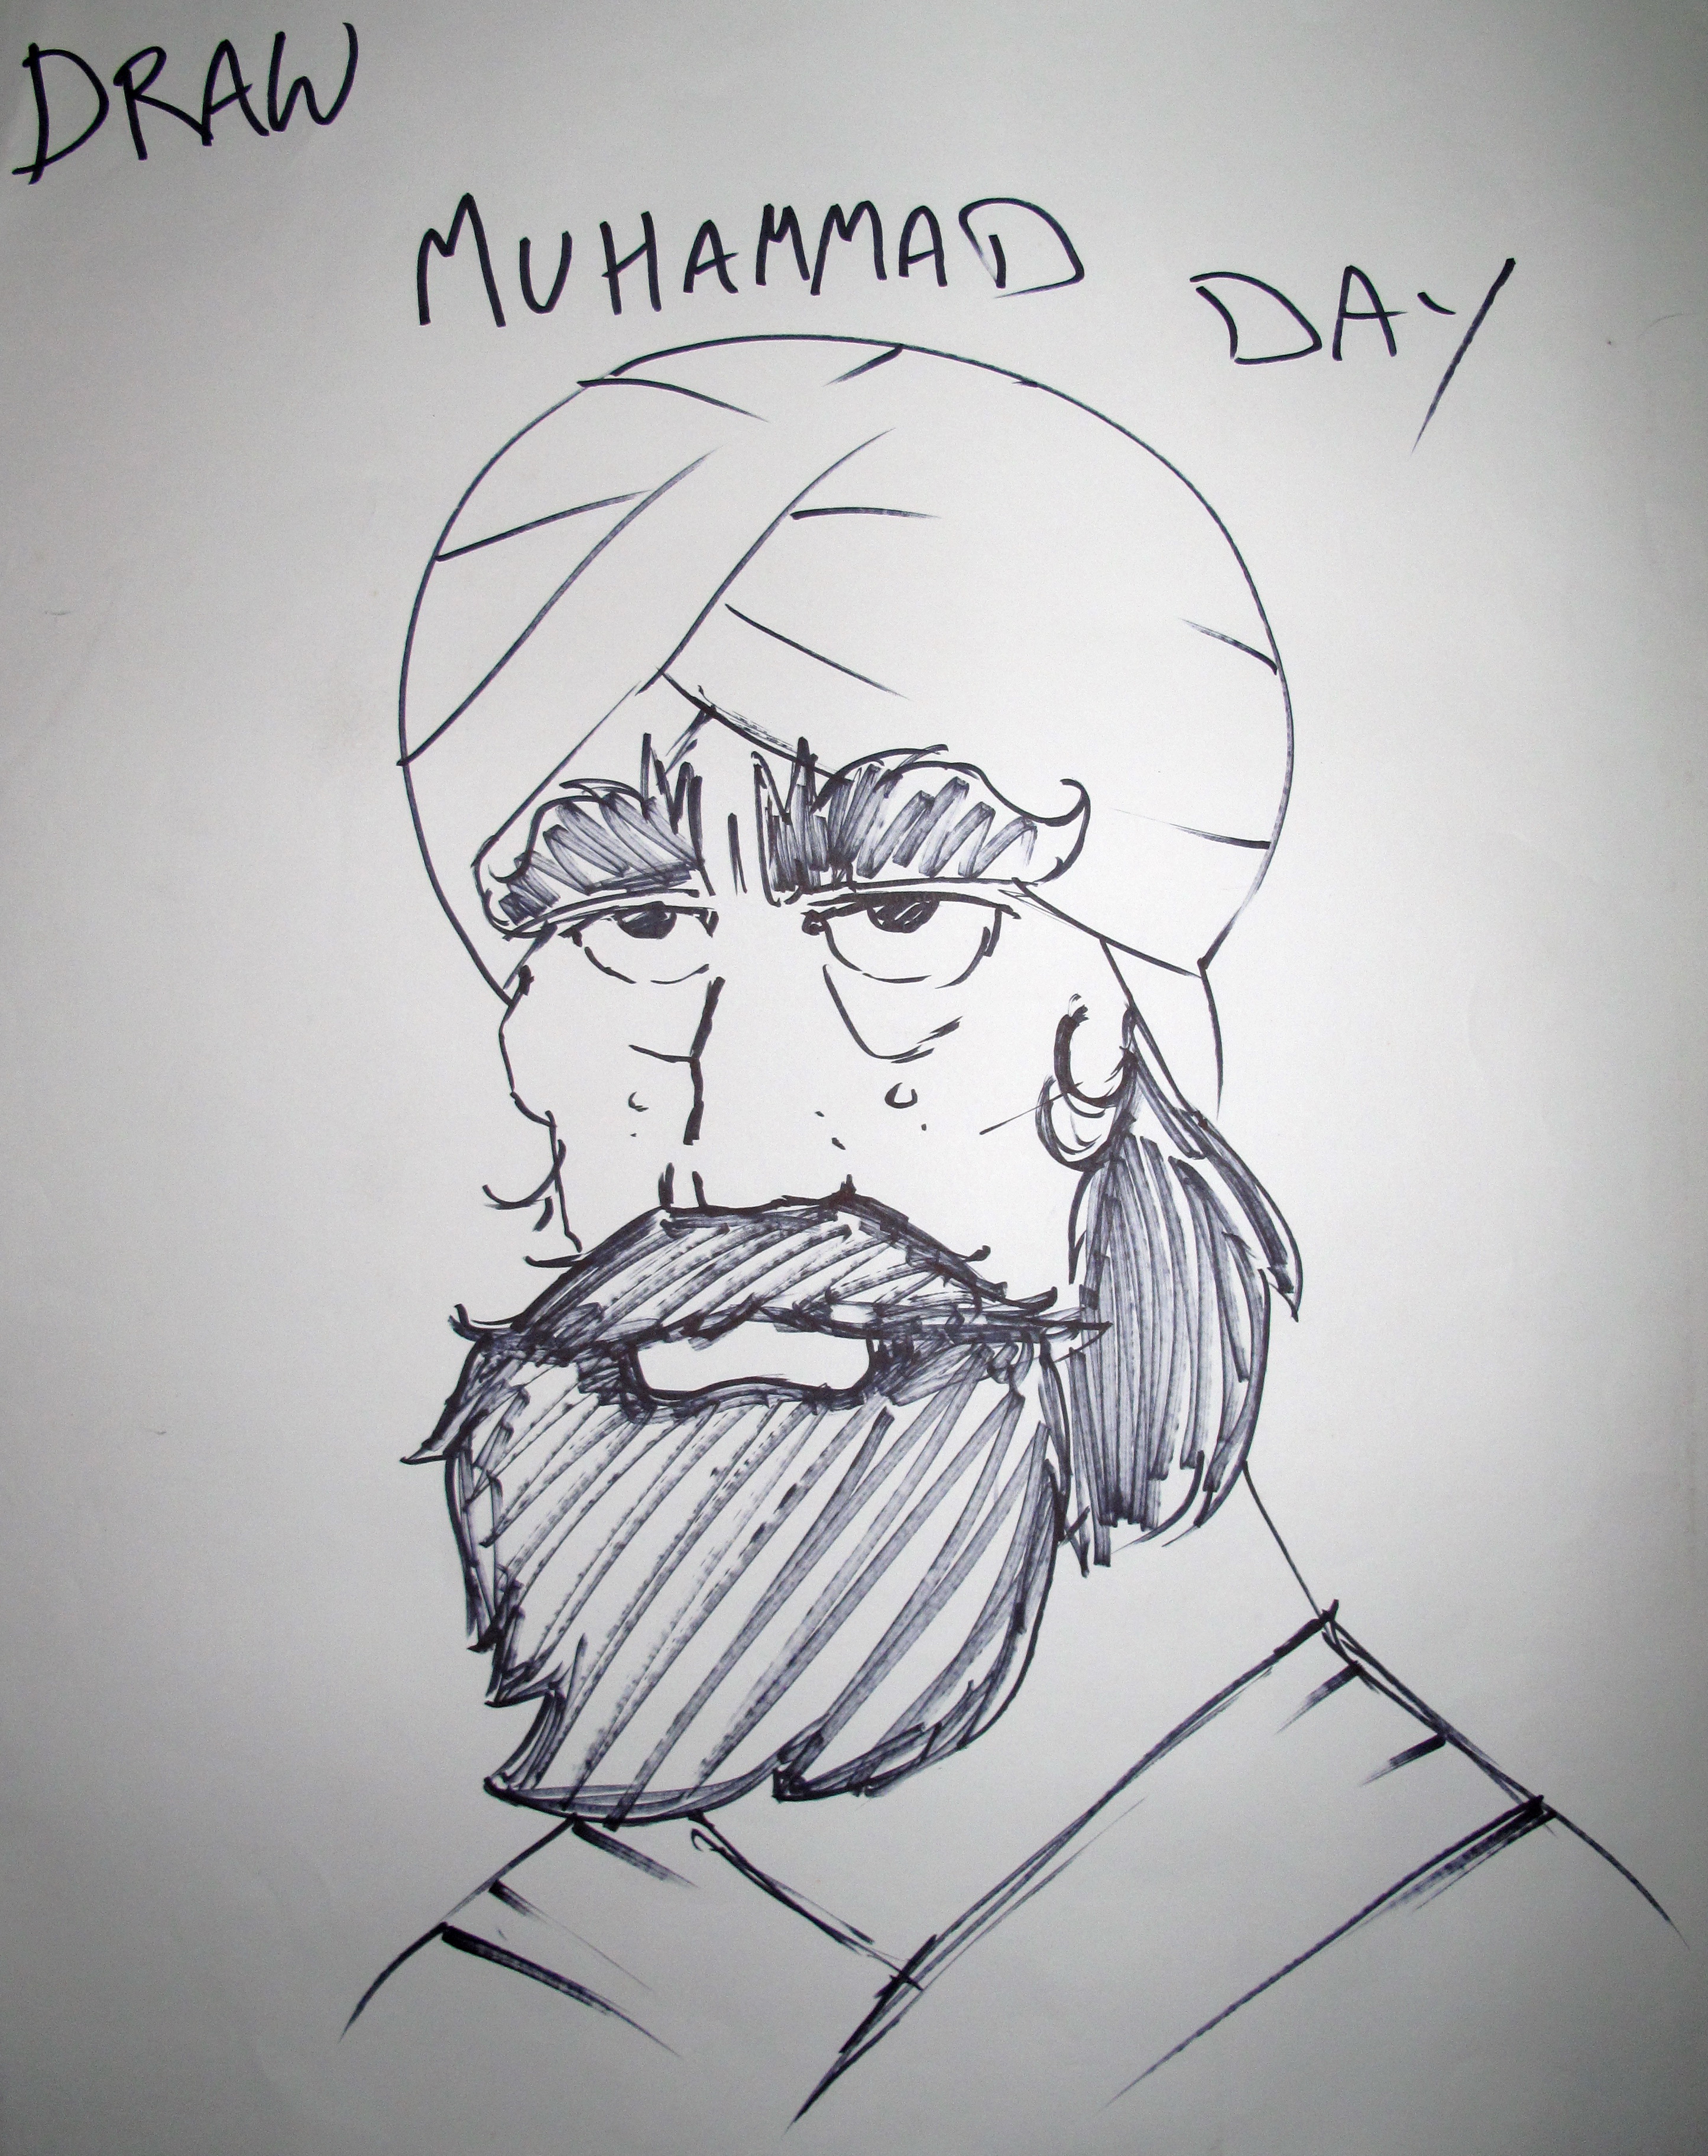 draw muhammad day